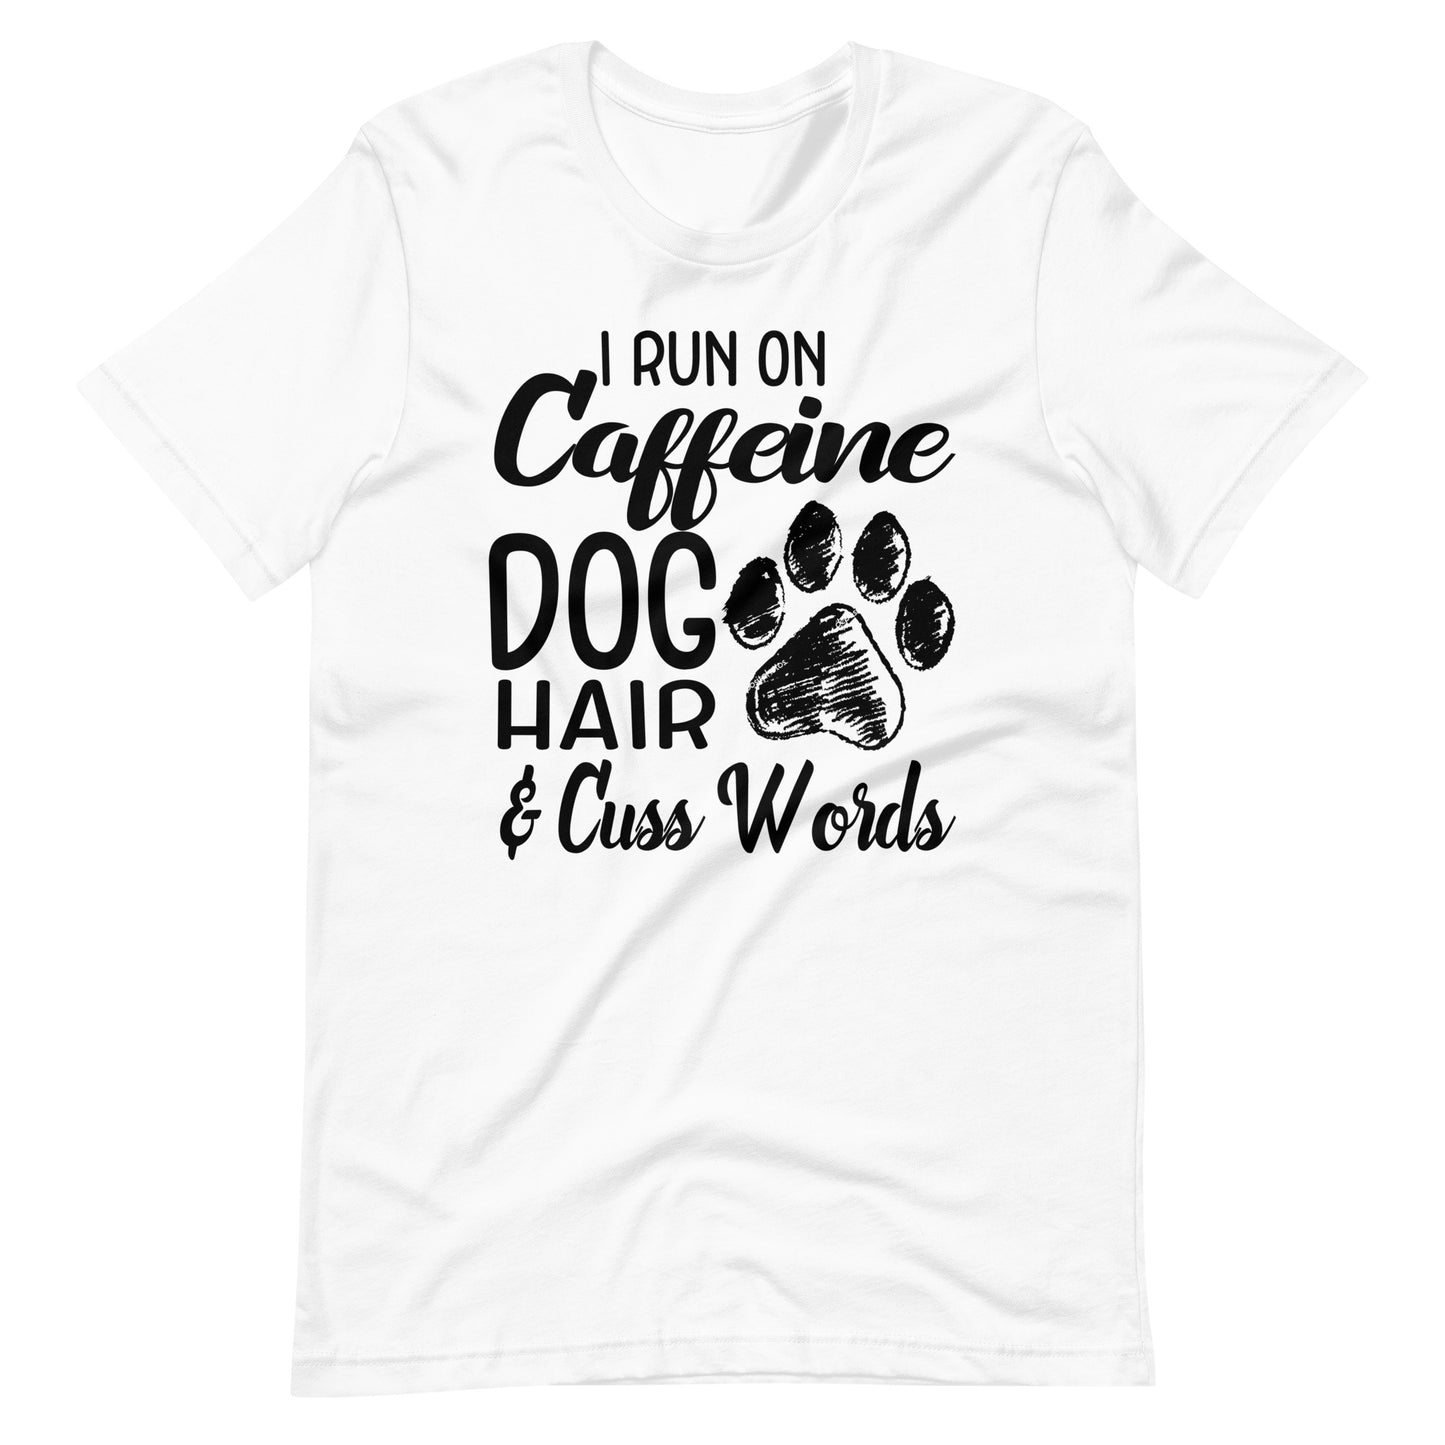 I Run on Caffeine Dog Hair & Cuss Words T-Shirt